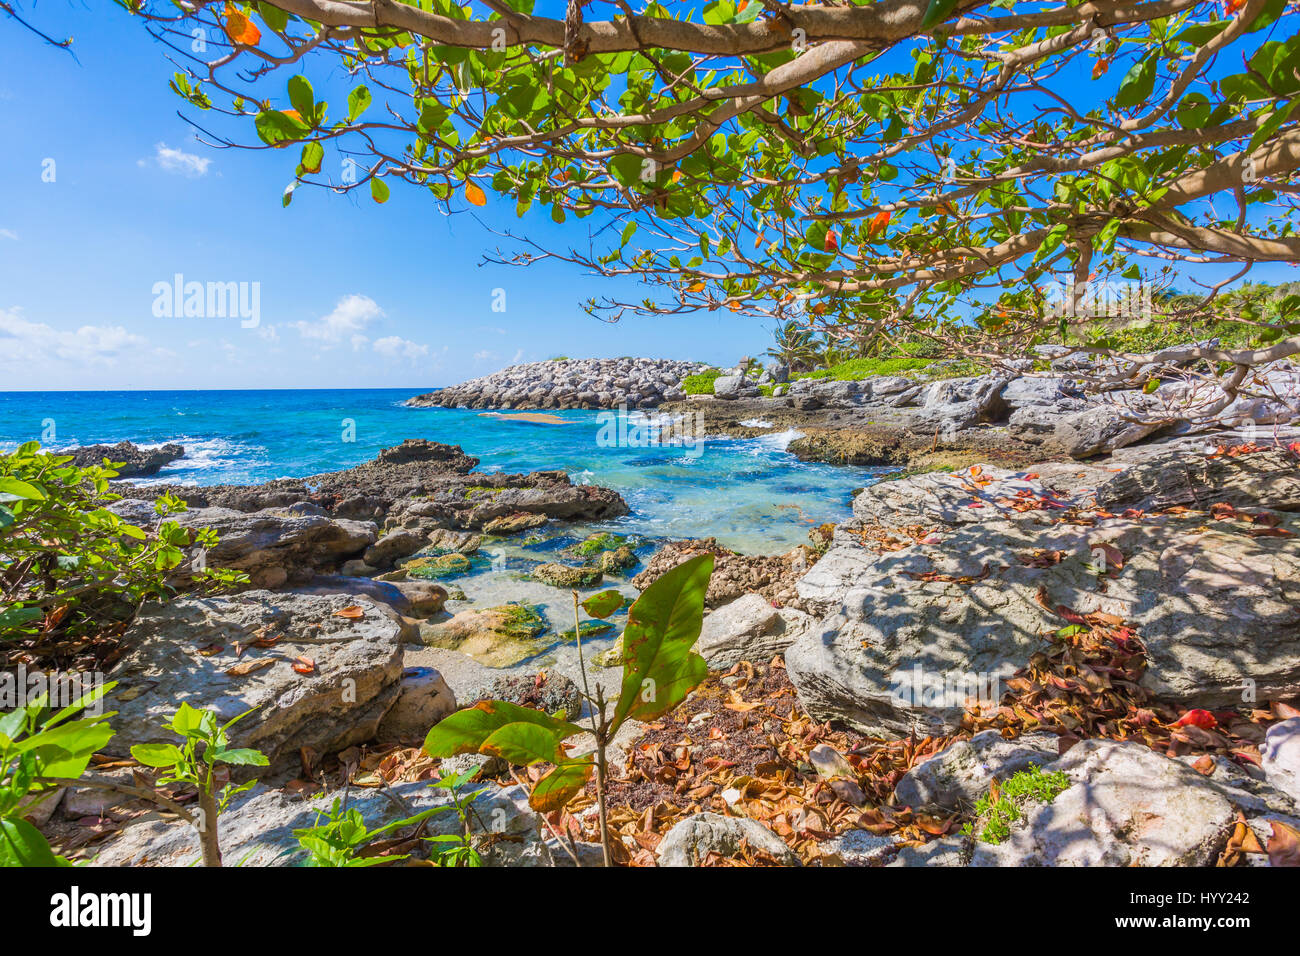 Tropical beach in caribbean sea, Cancun, Mexico Stock Photo